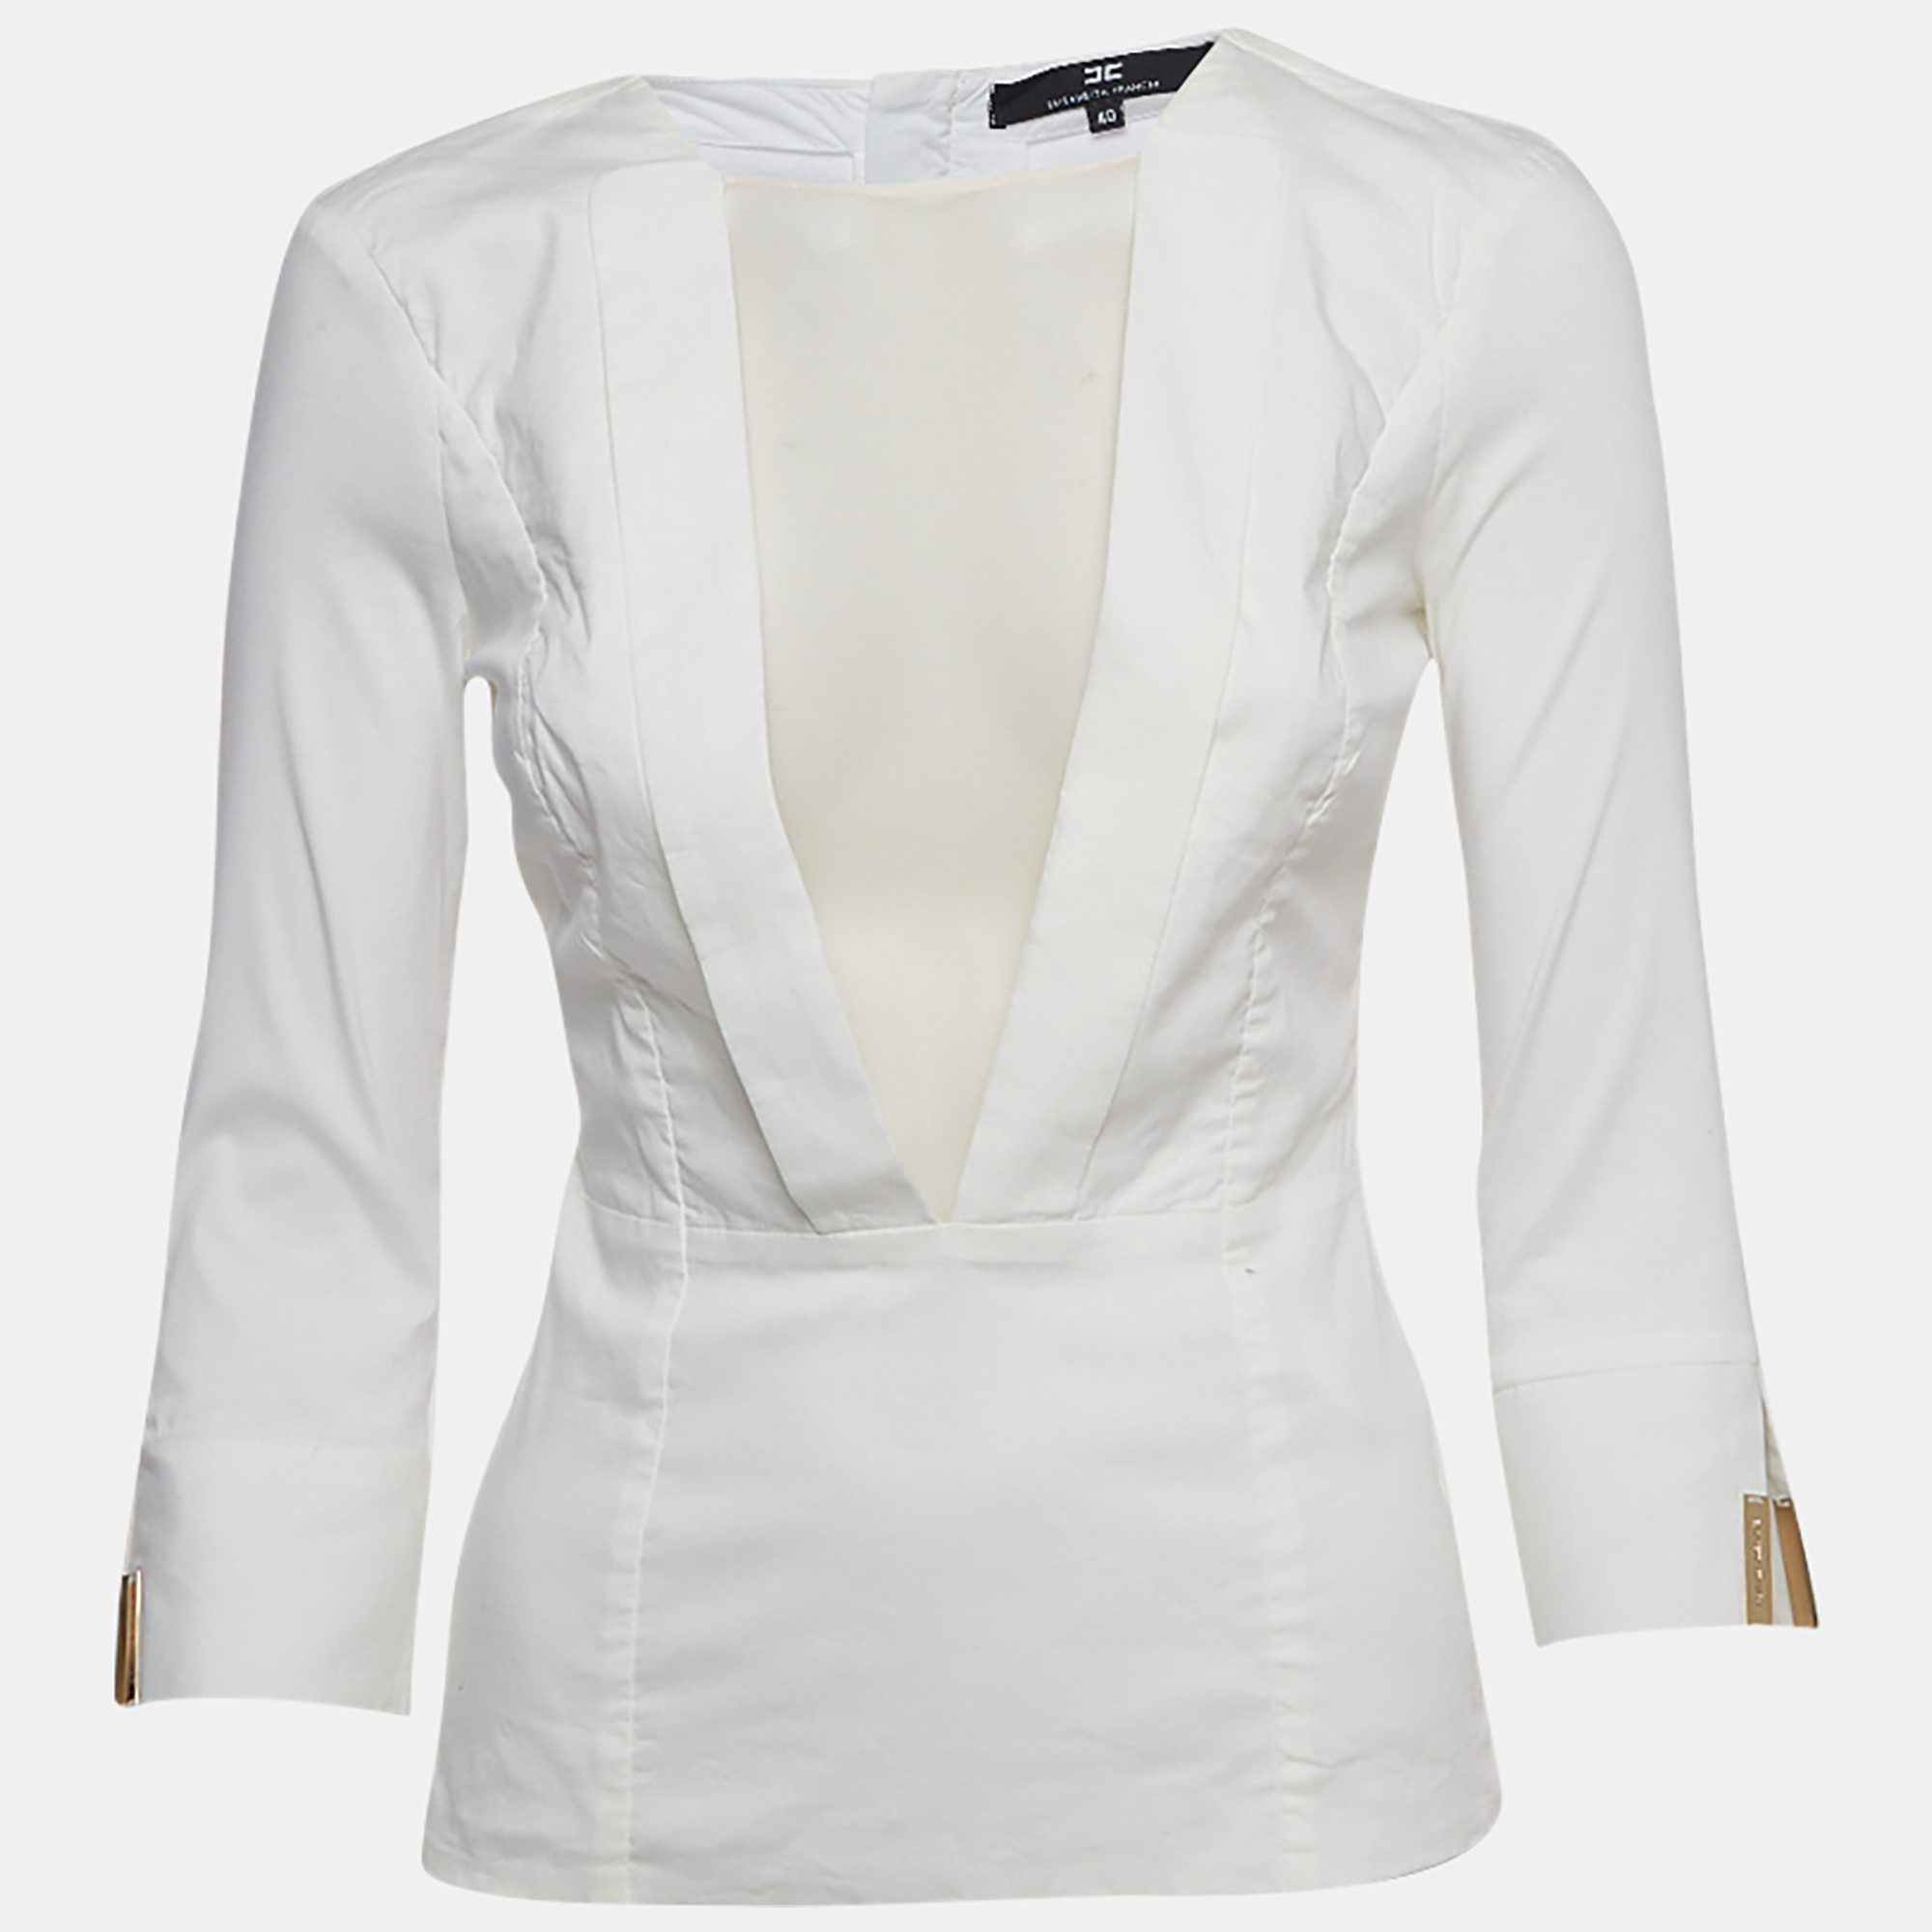 Elisabetta Franchi White Cotton Blend Long Sleeve Top S